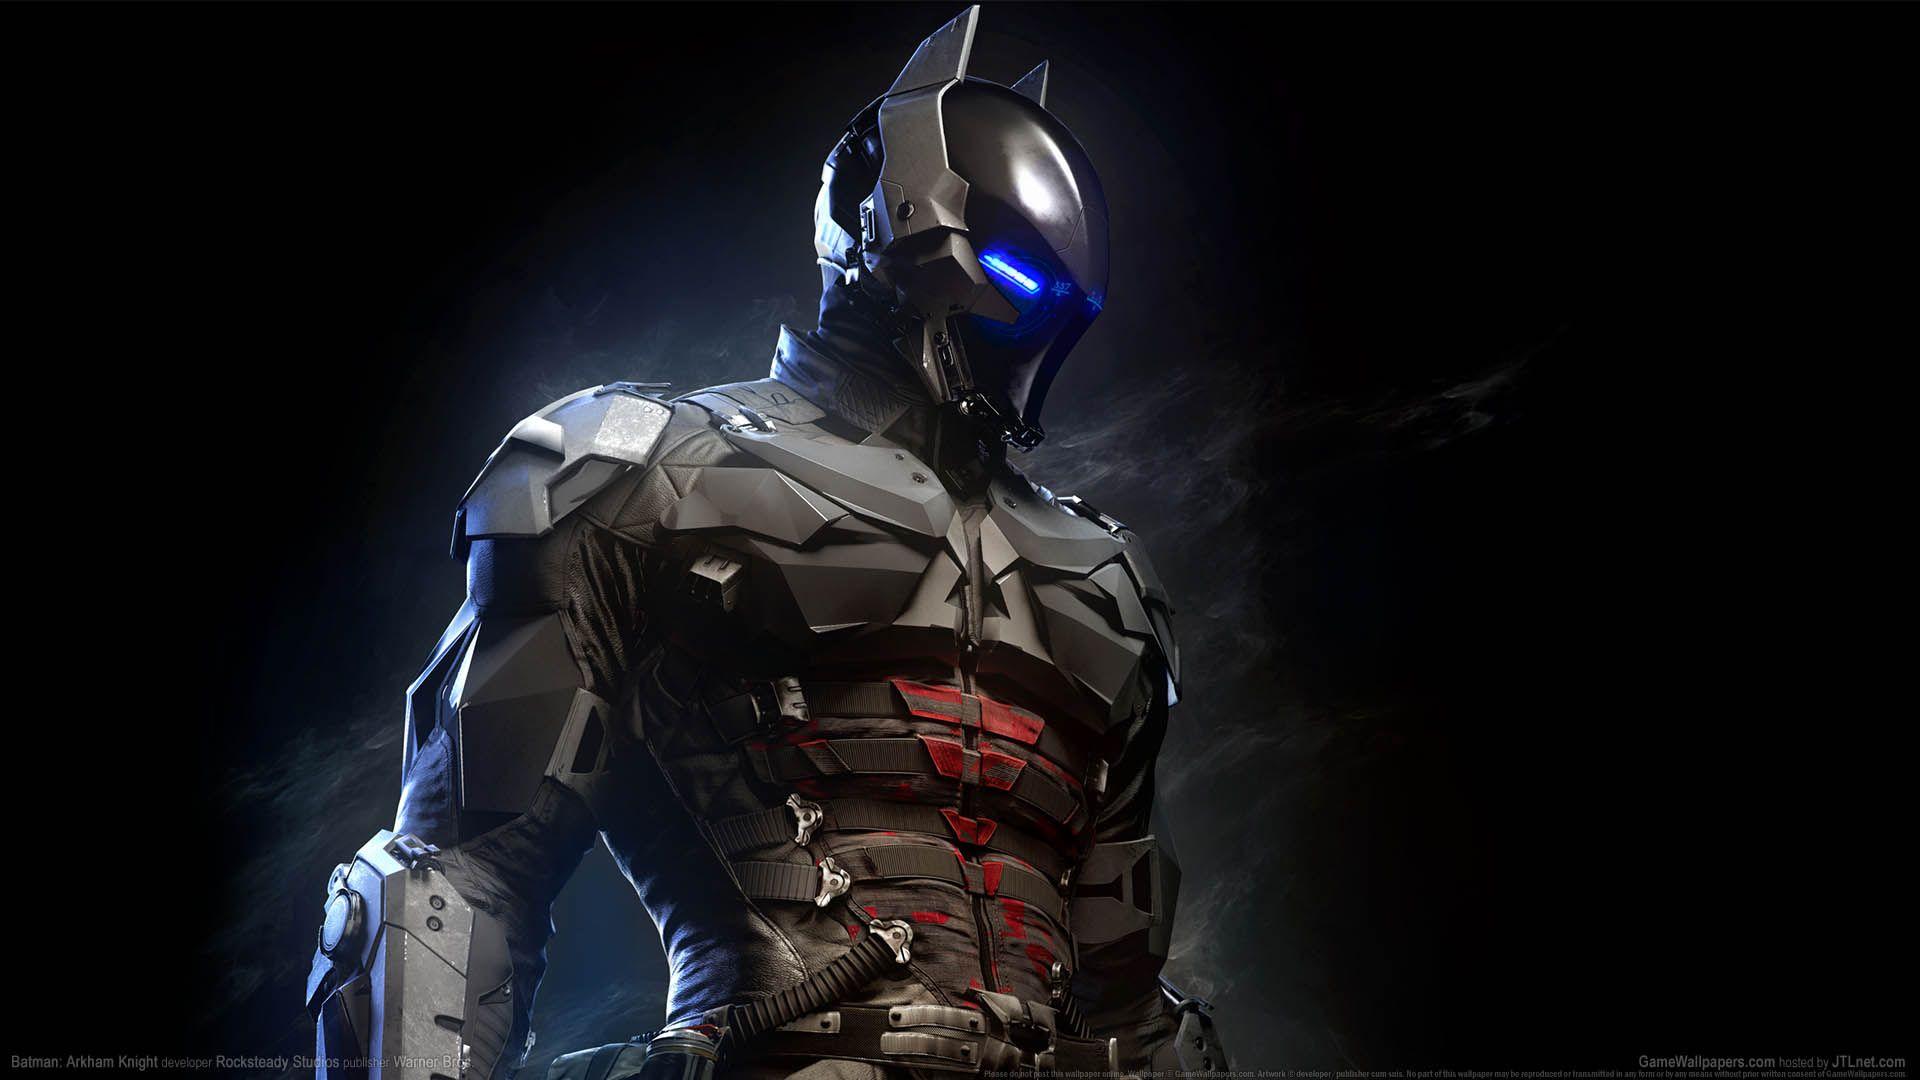 Batman: Arkham Knight wallpaper or desktop background